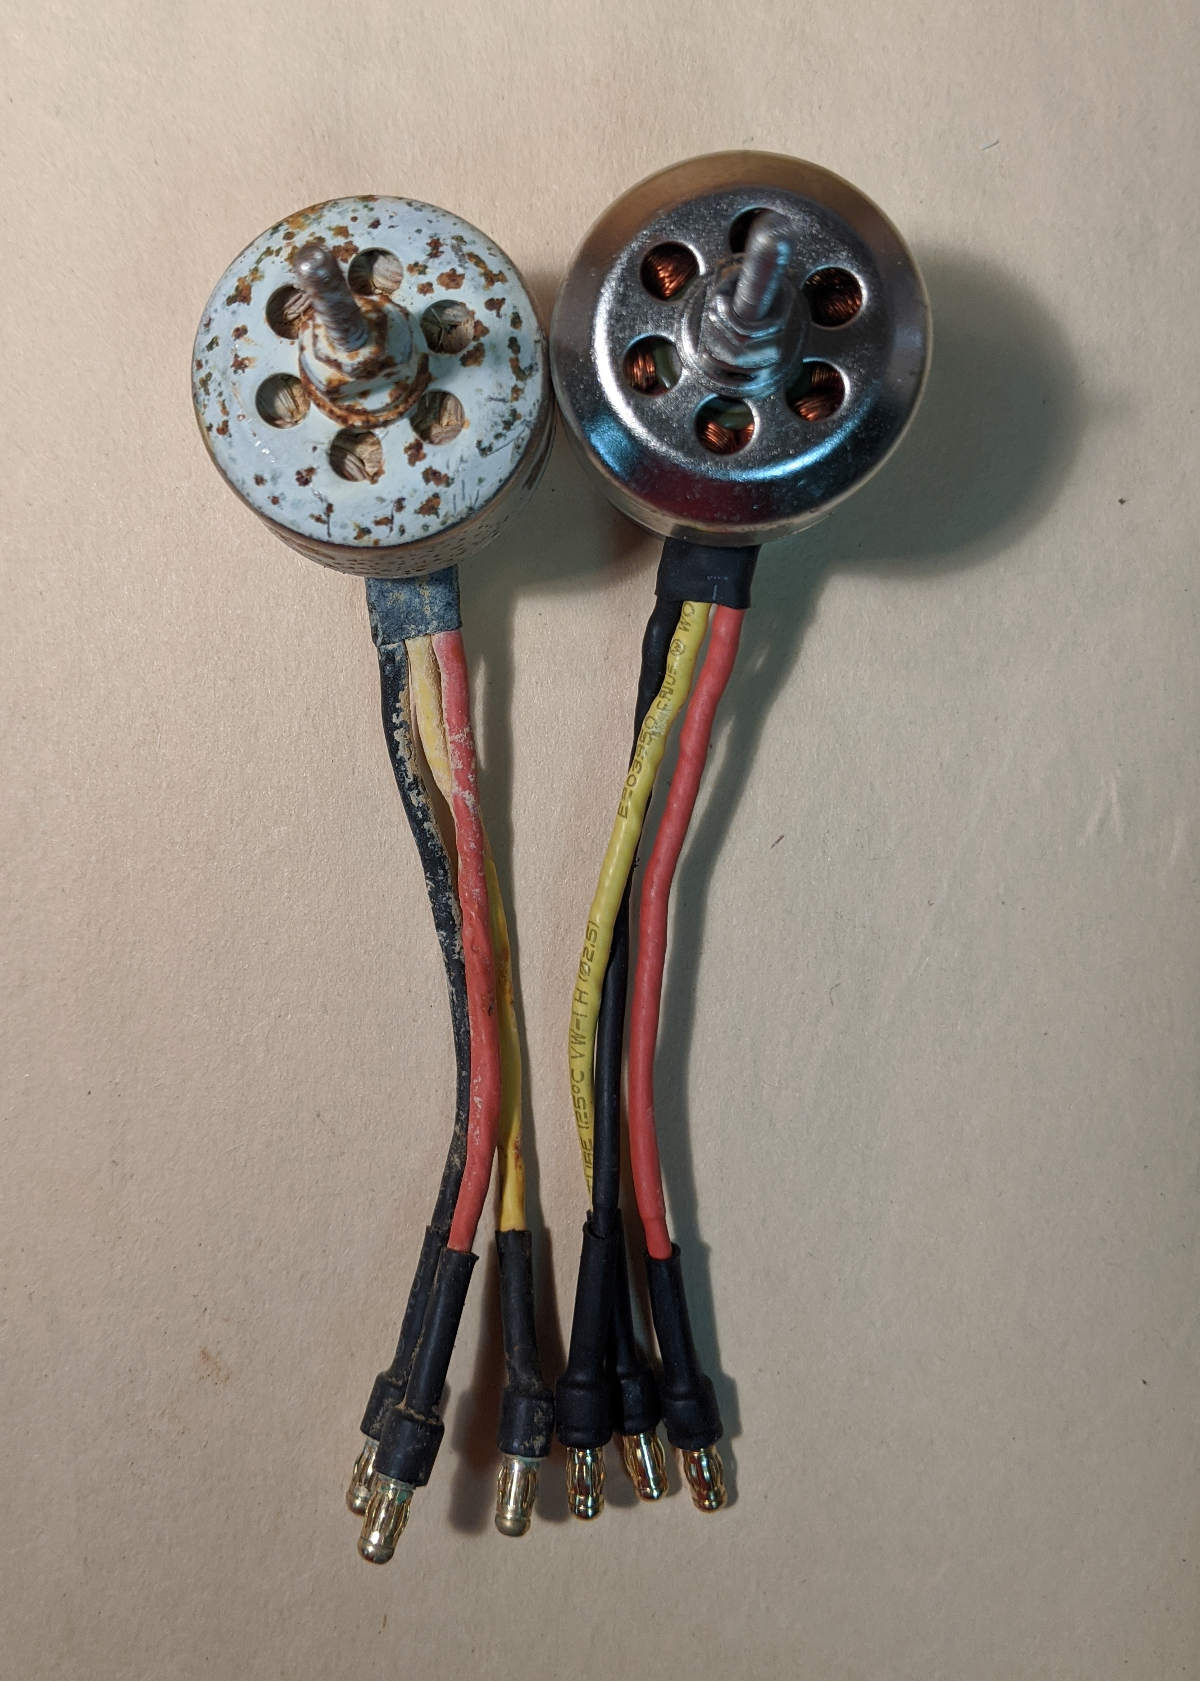 Brushless motors rusted